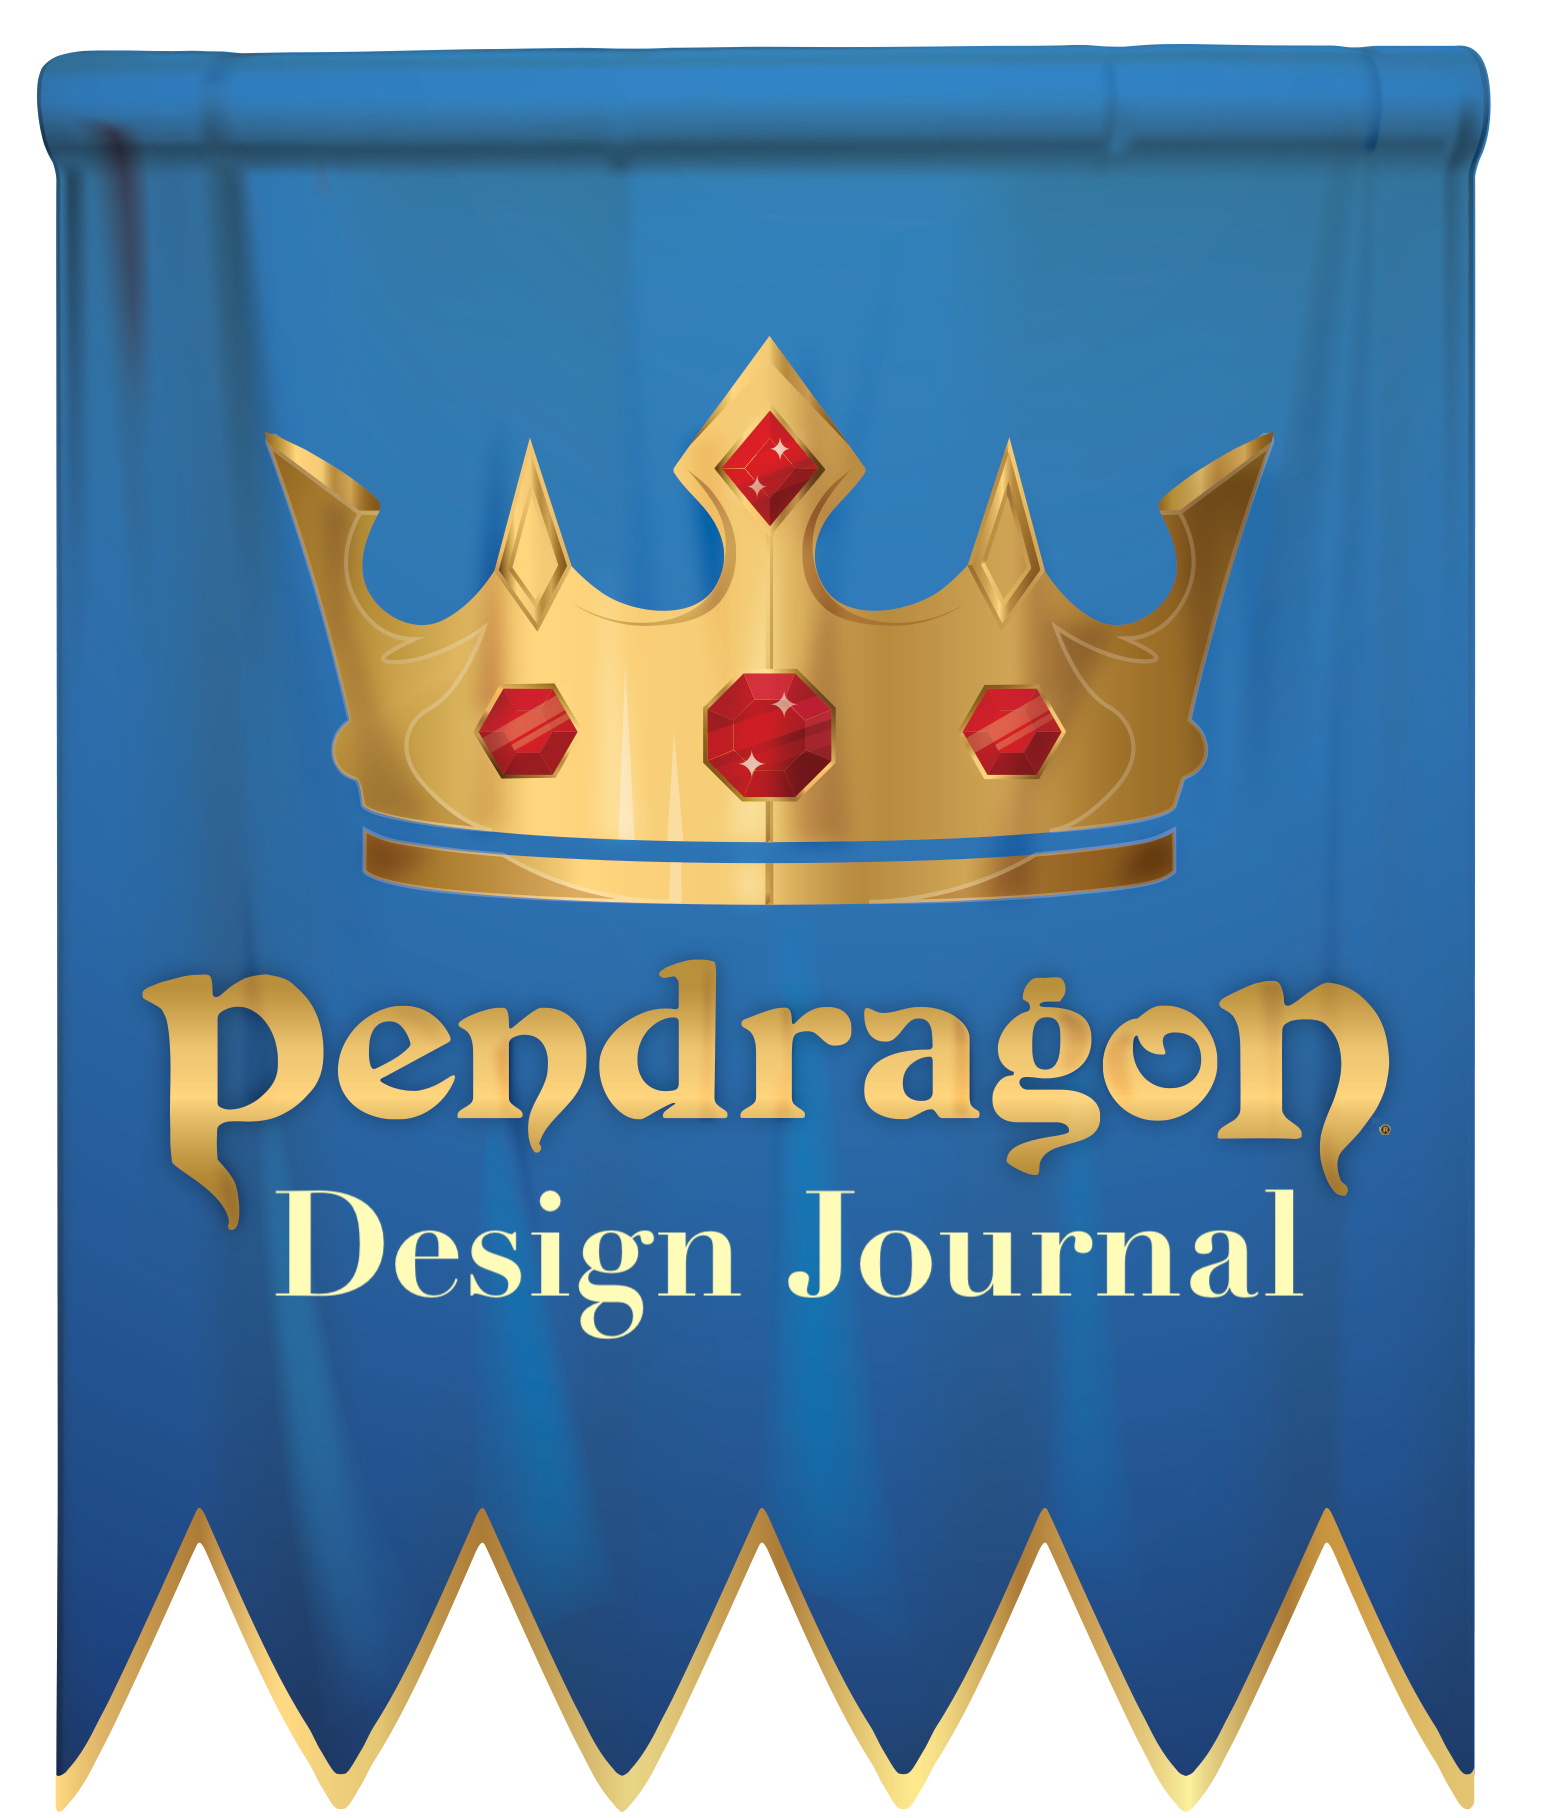 Pendragon Design Journal logo